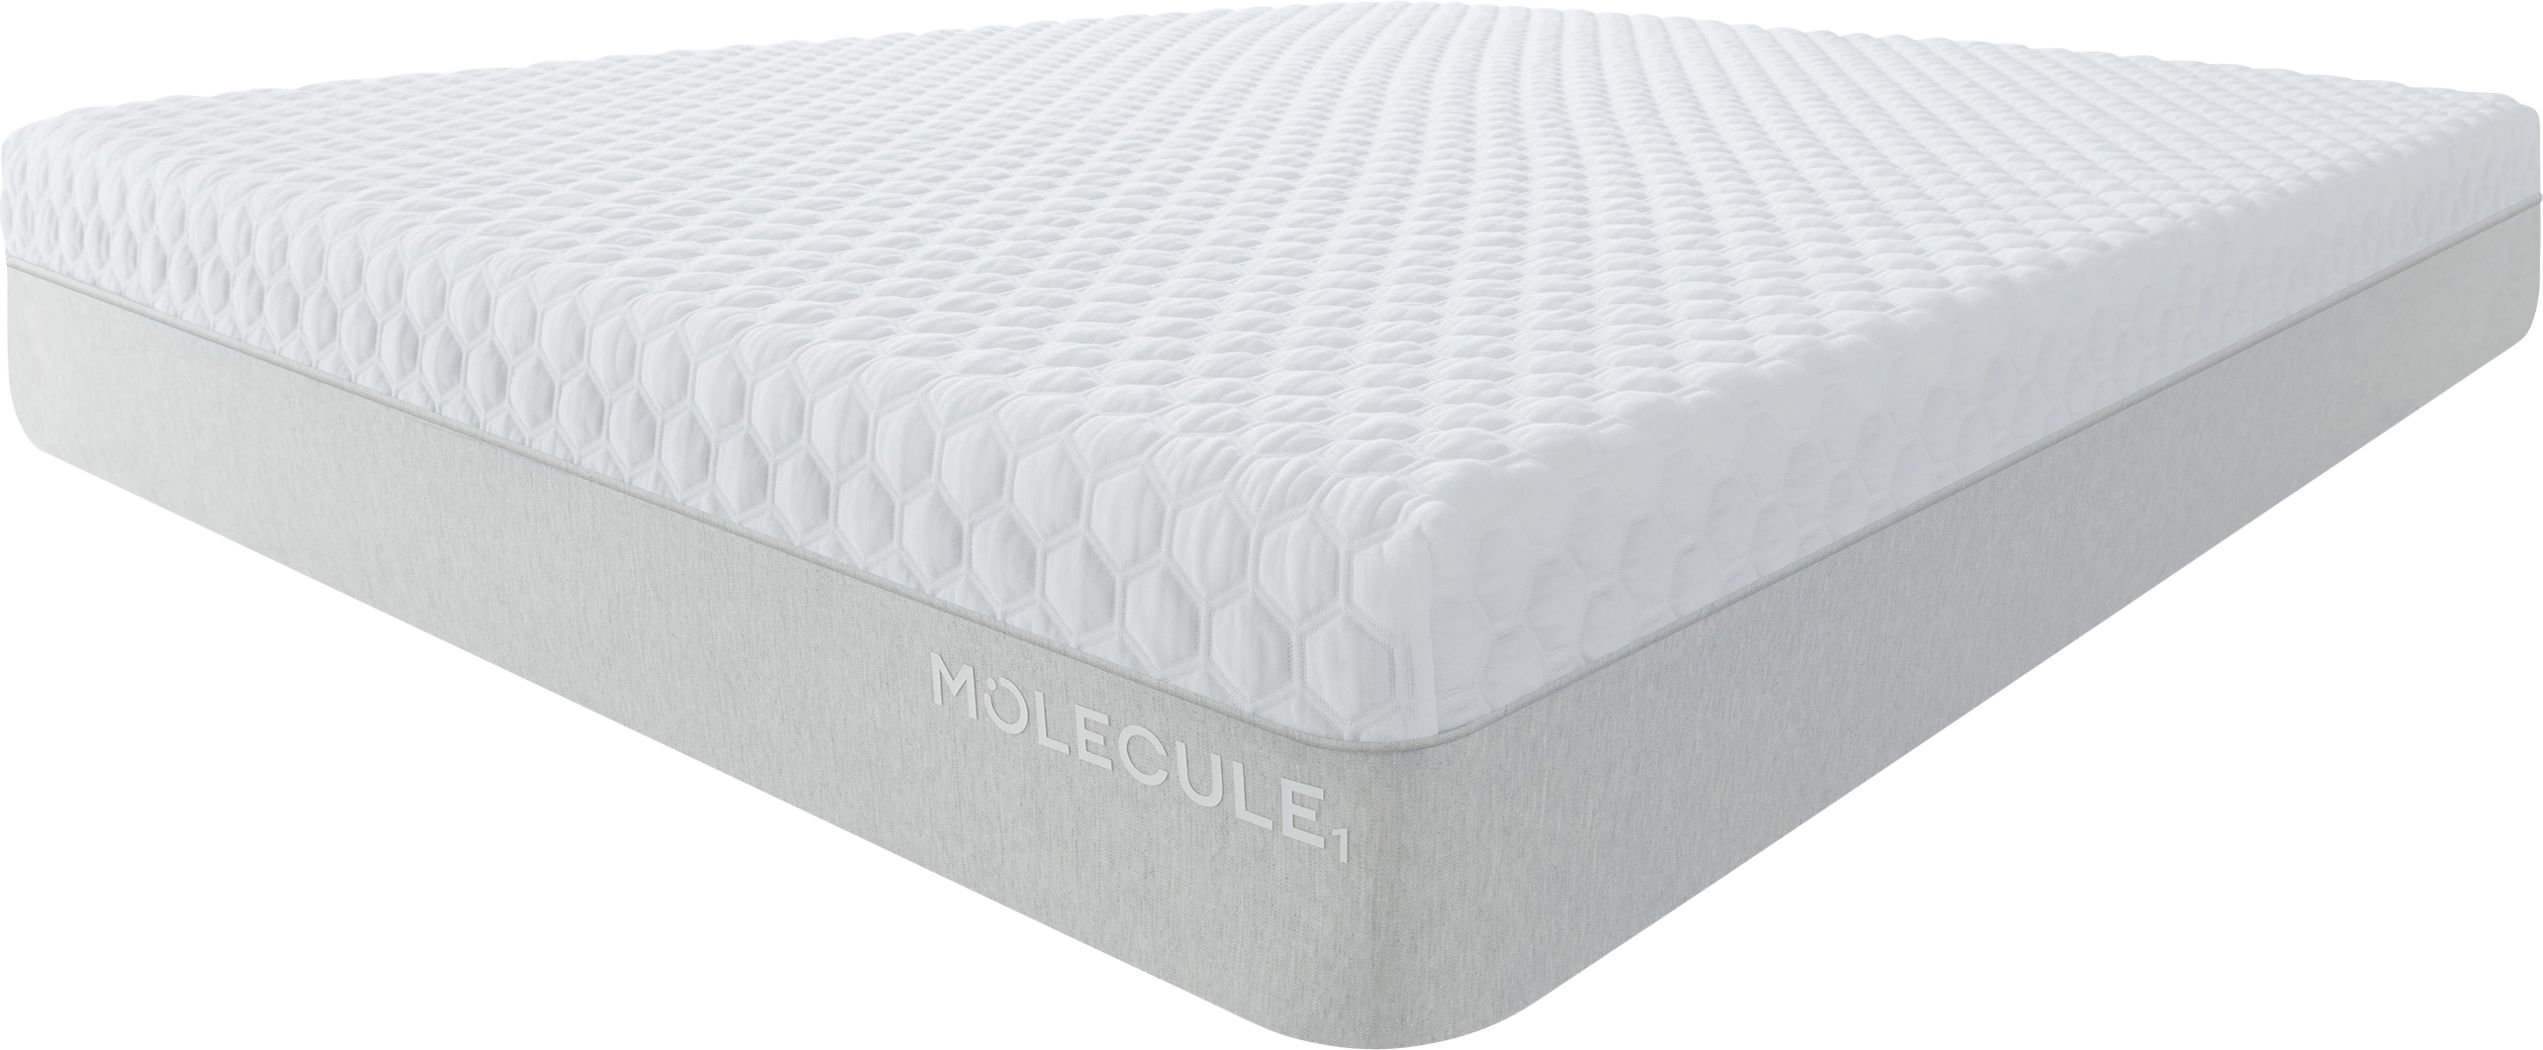 molecule 1 cooling foam mattress